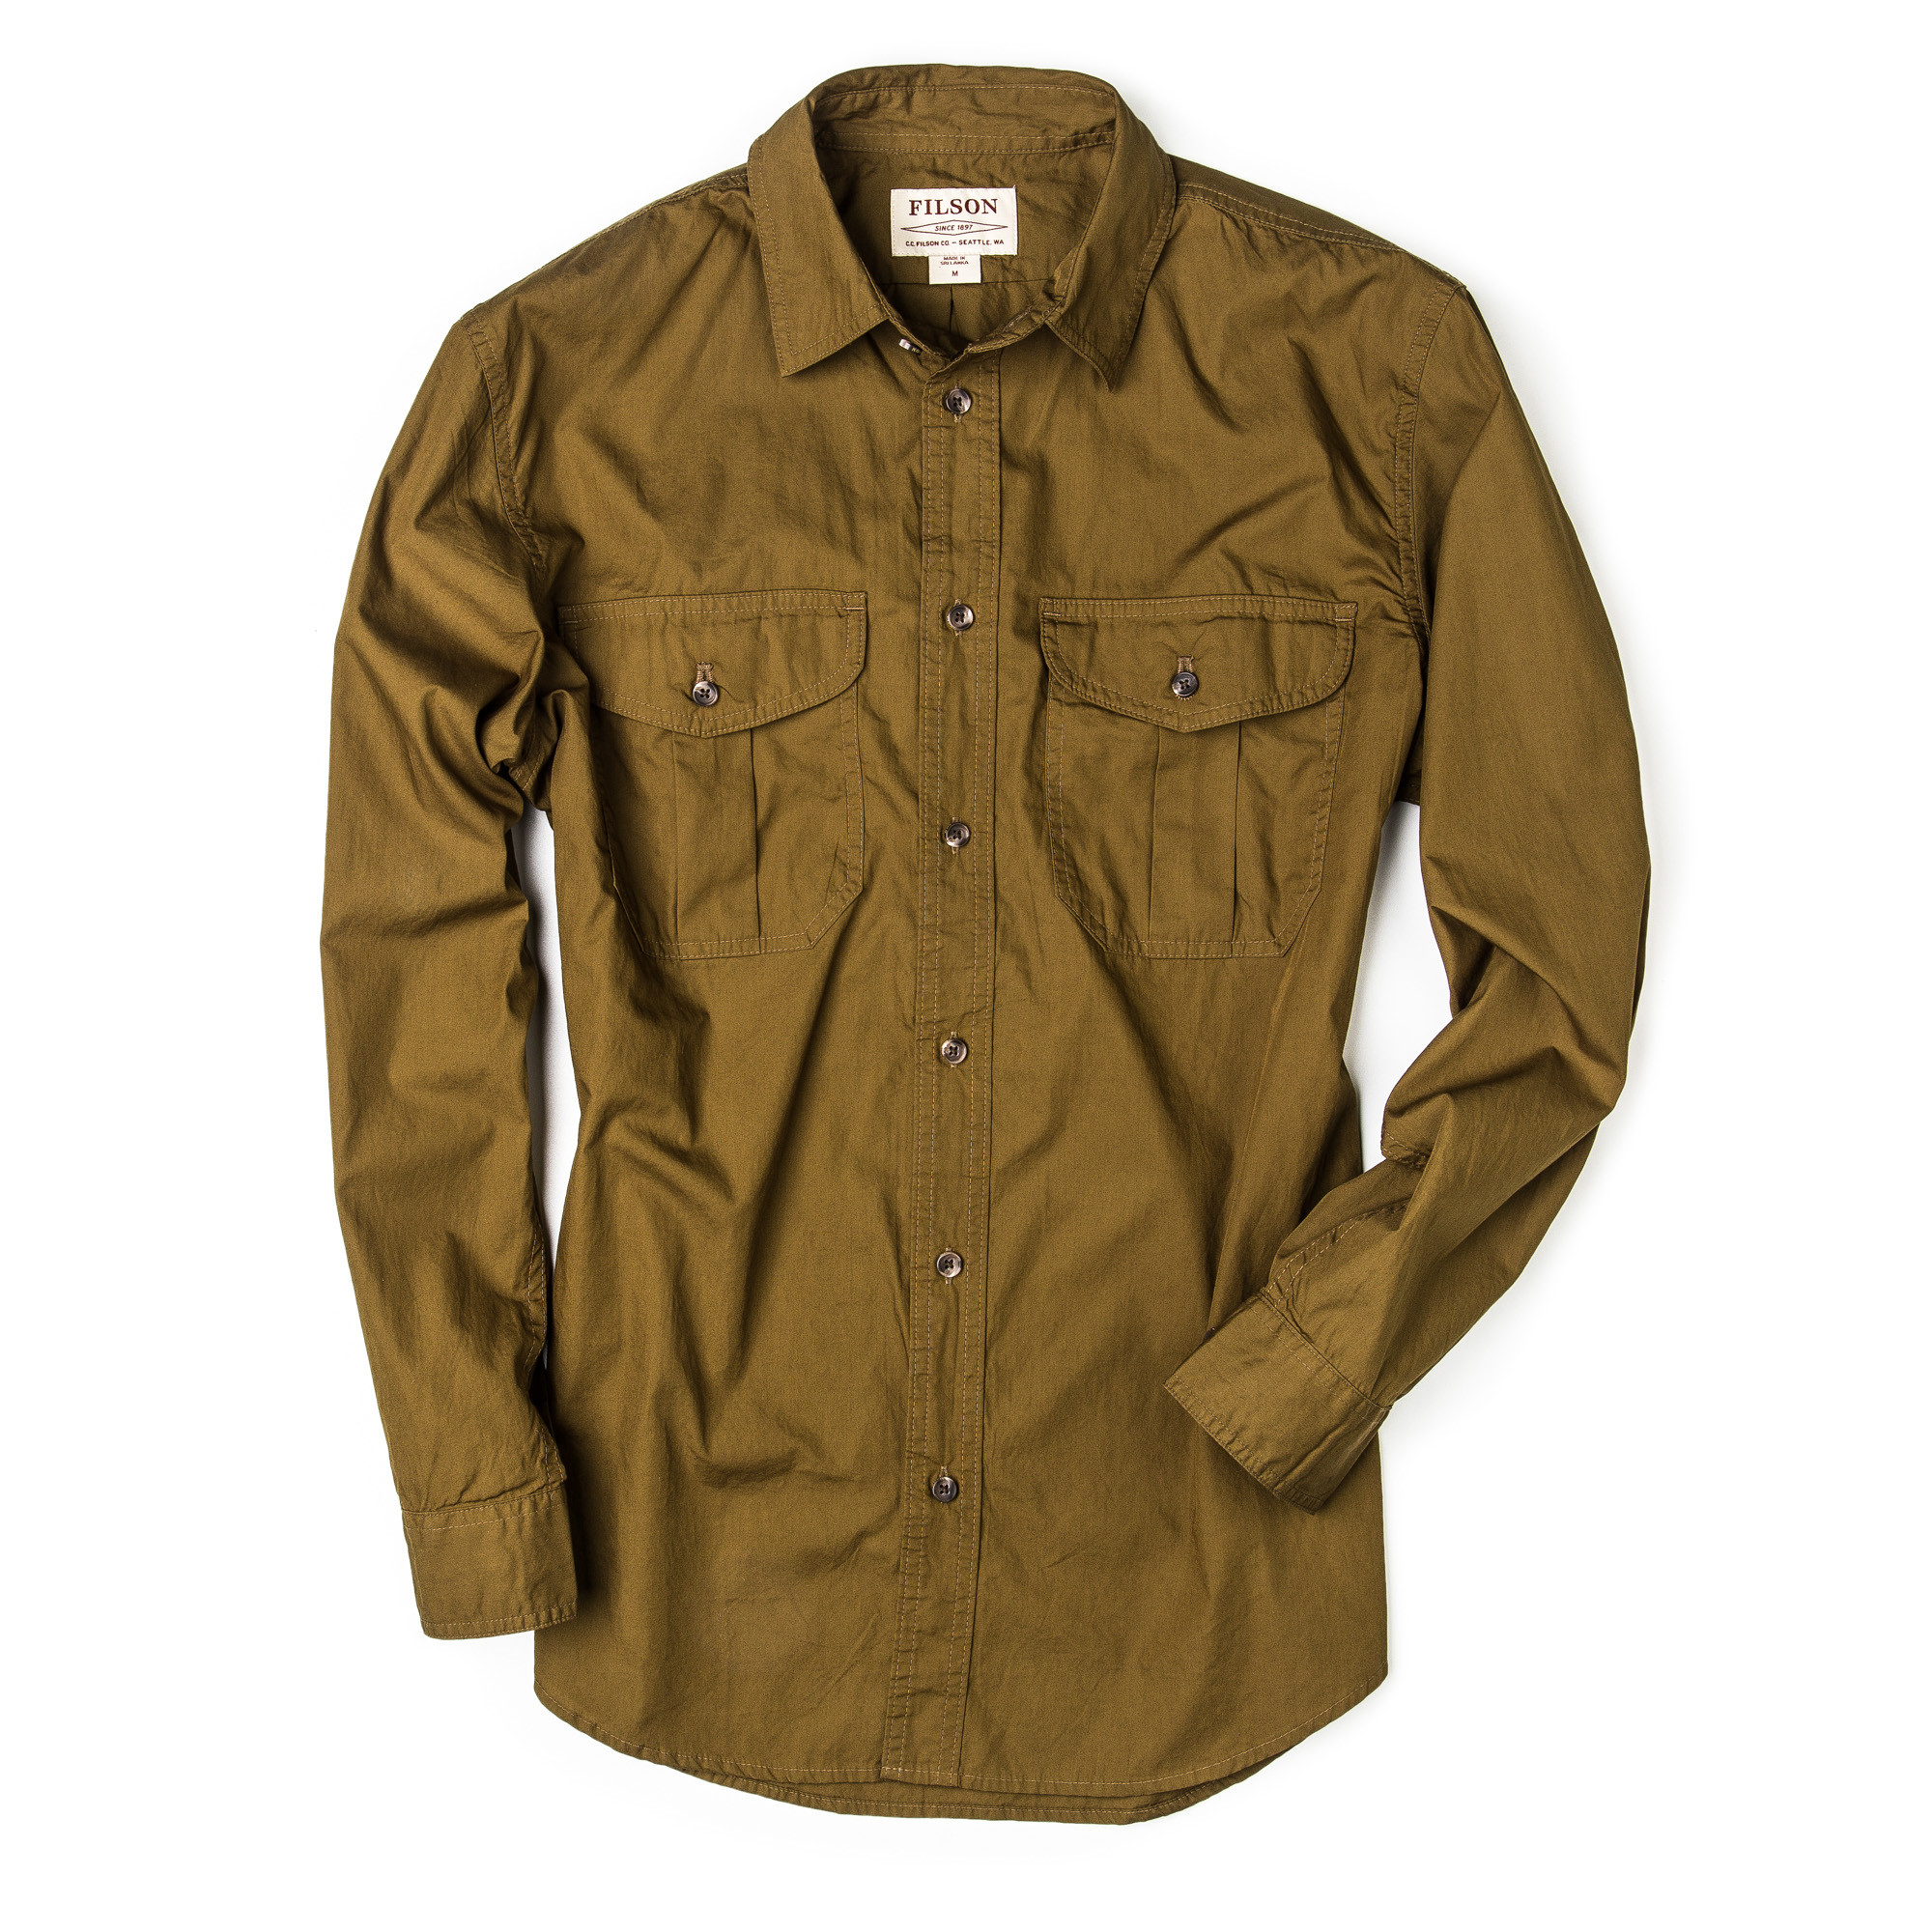 Filson - Feather Cloth Shirt - Marsh Olive